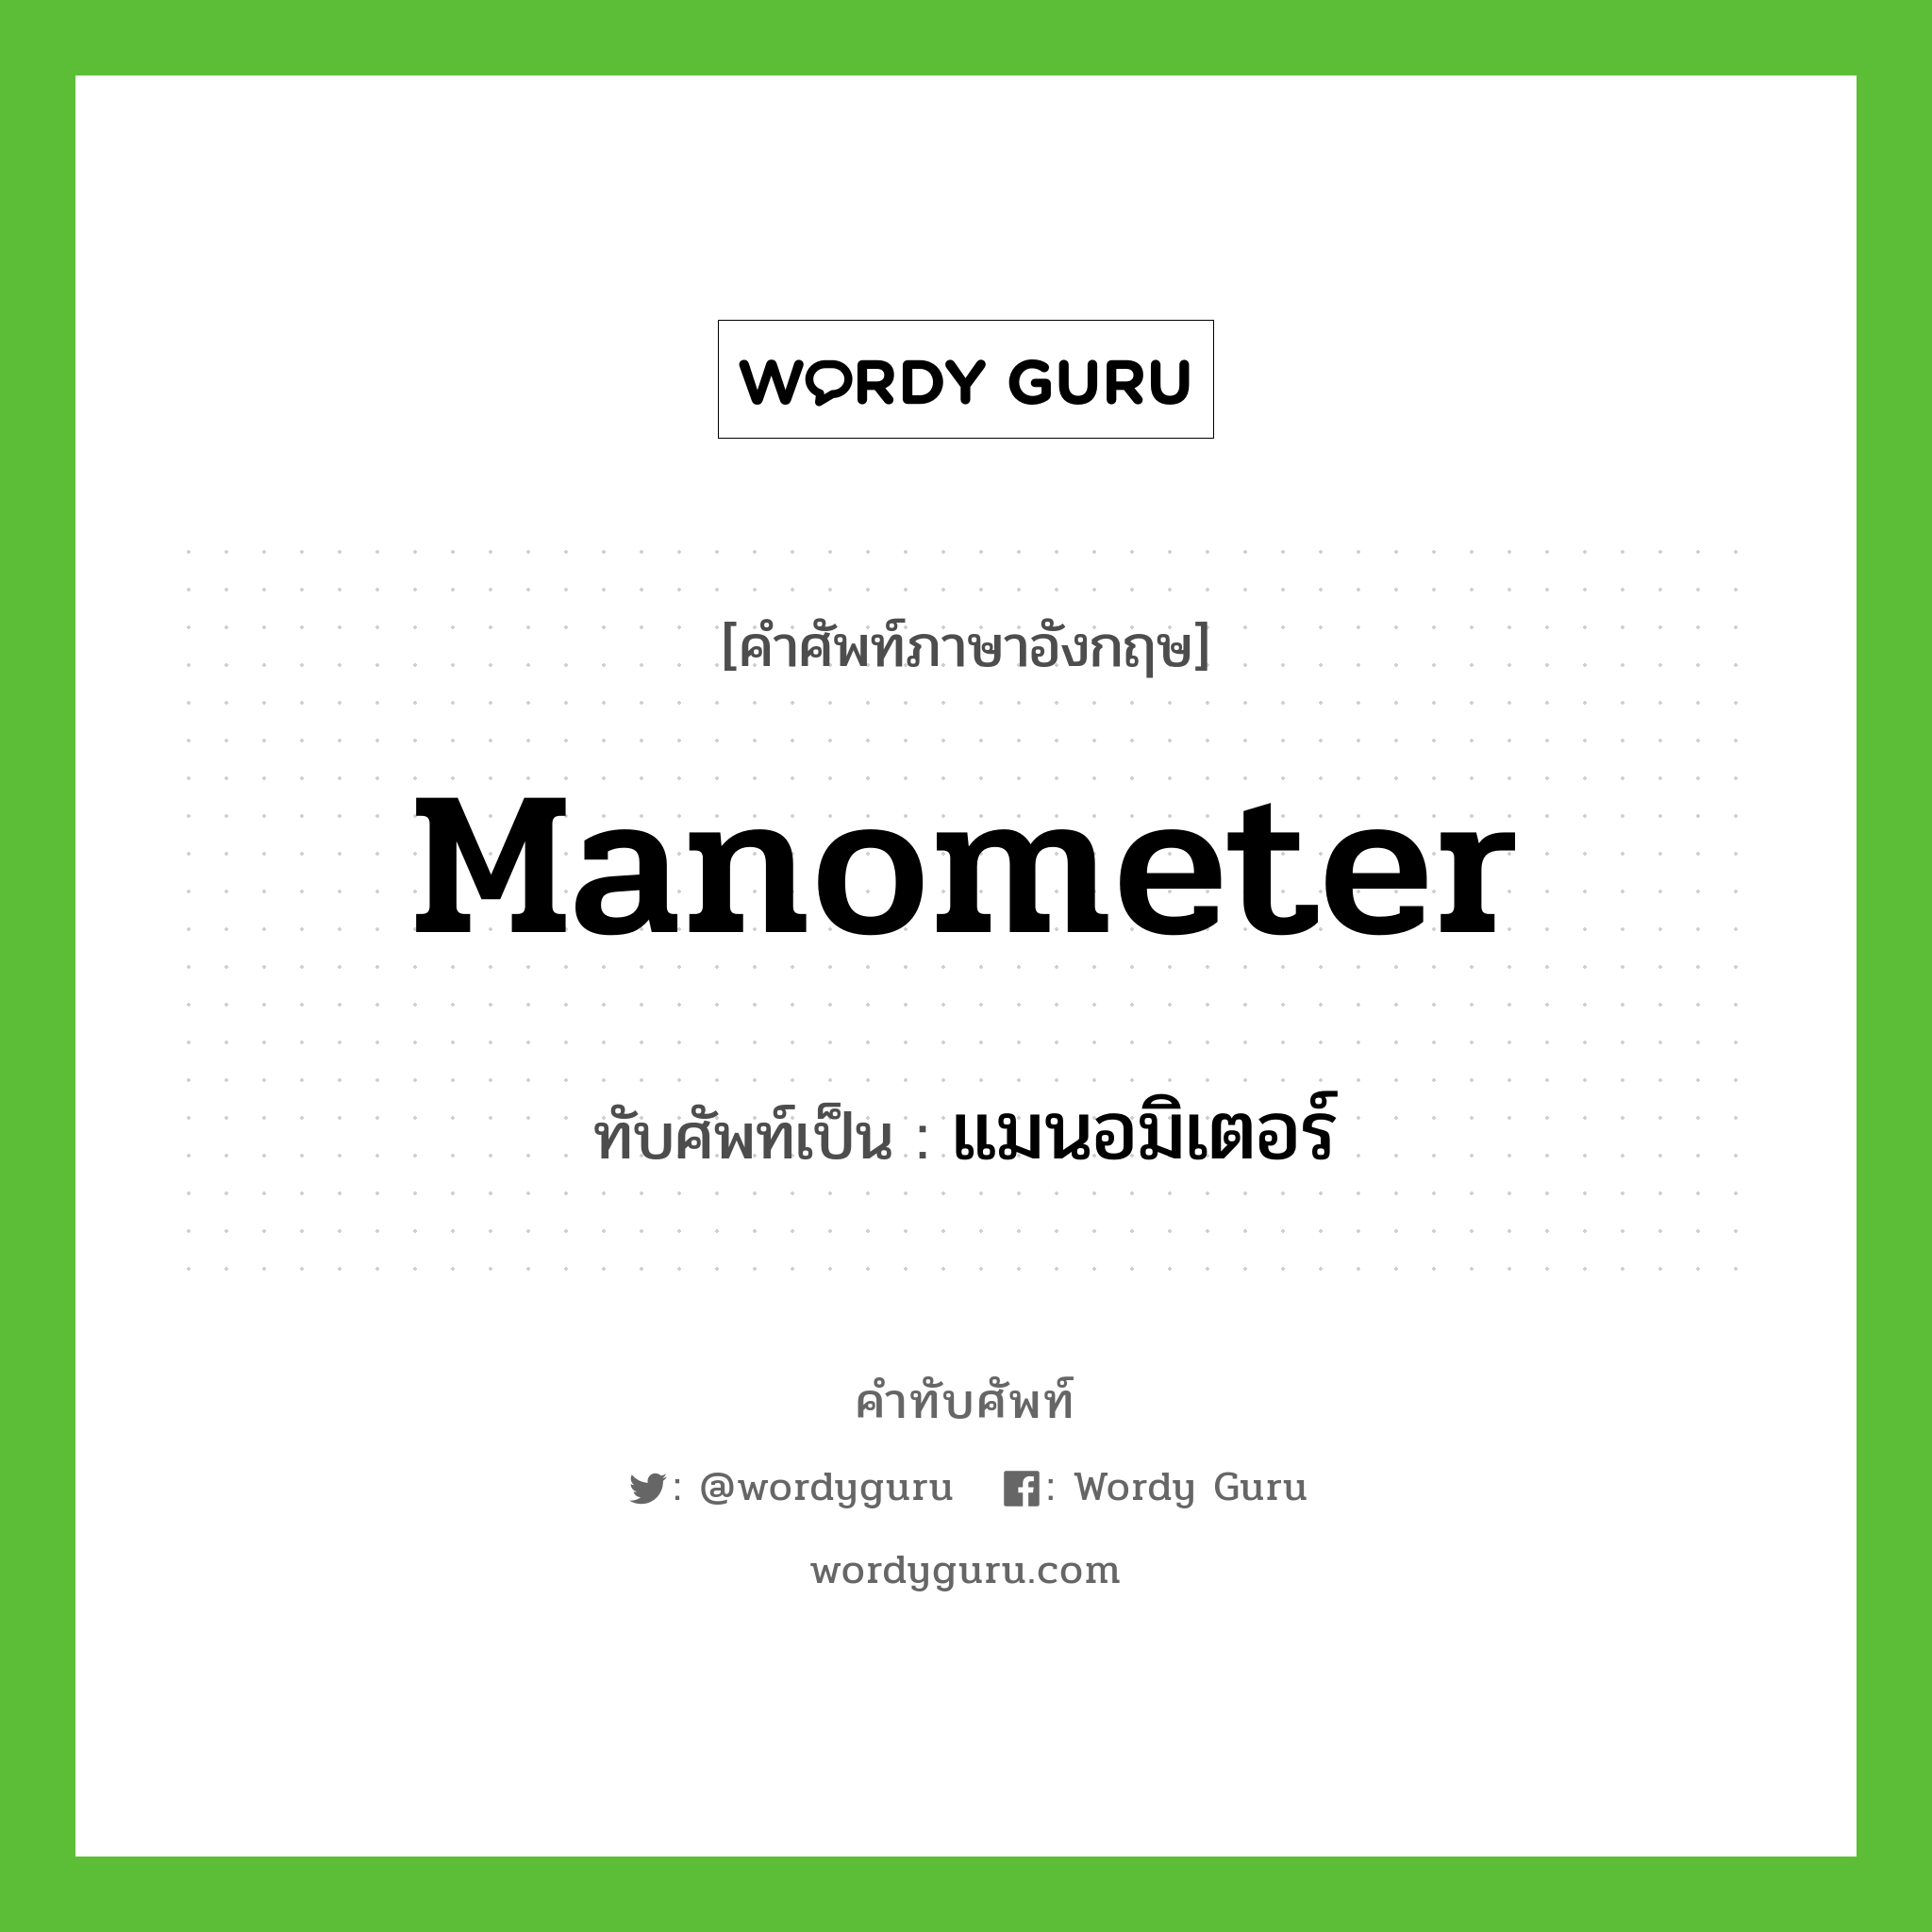 manometer เขียนเป็นคำไทยว่าอะไร?, คำศัพท์ภาษาอังกฤษ manometer ทับศัพท์เป็น แมนอมิเตอร์